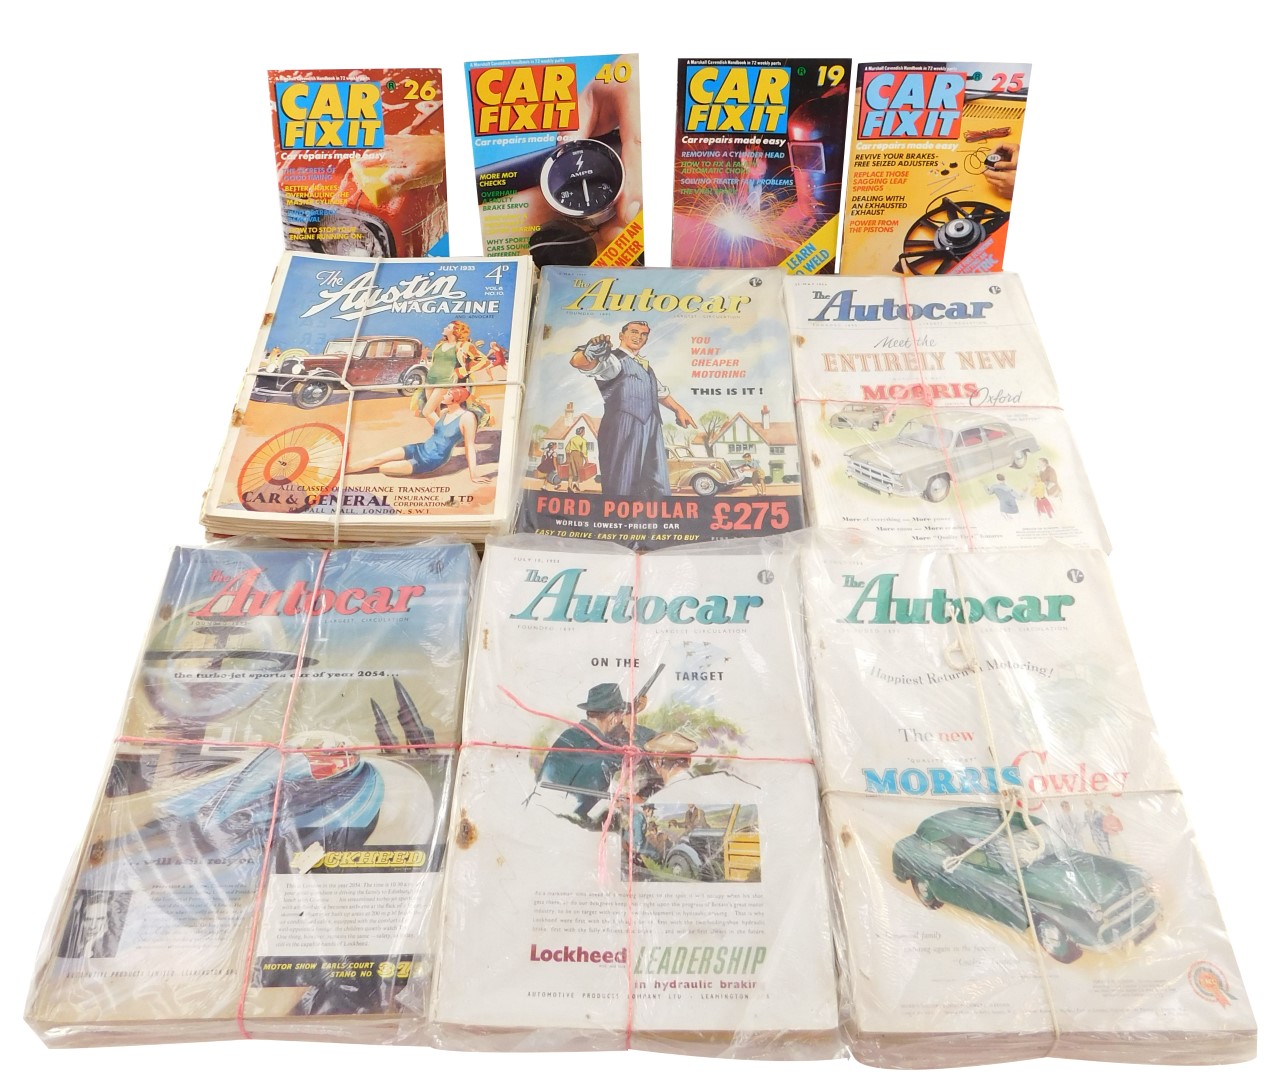 The Auto Car Magazine 1953-54, The Austin Magazine, 1930-38, and Car Fix It magazine. (a quantity)